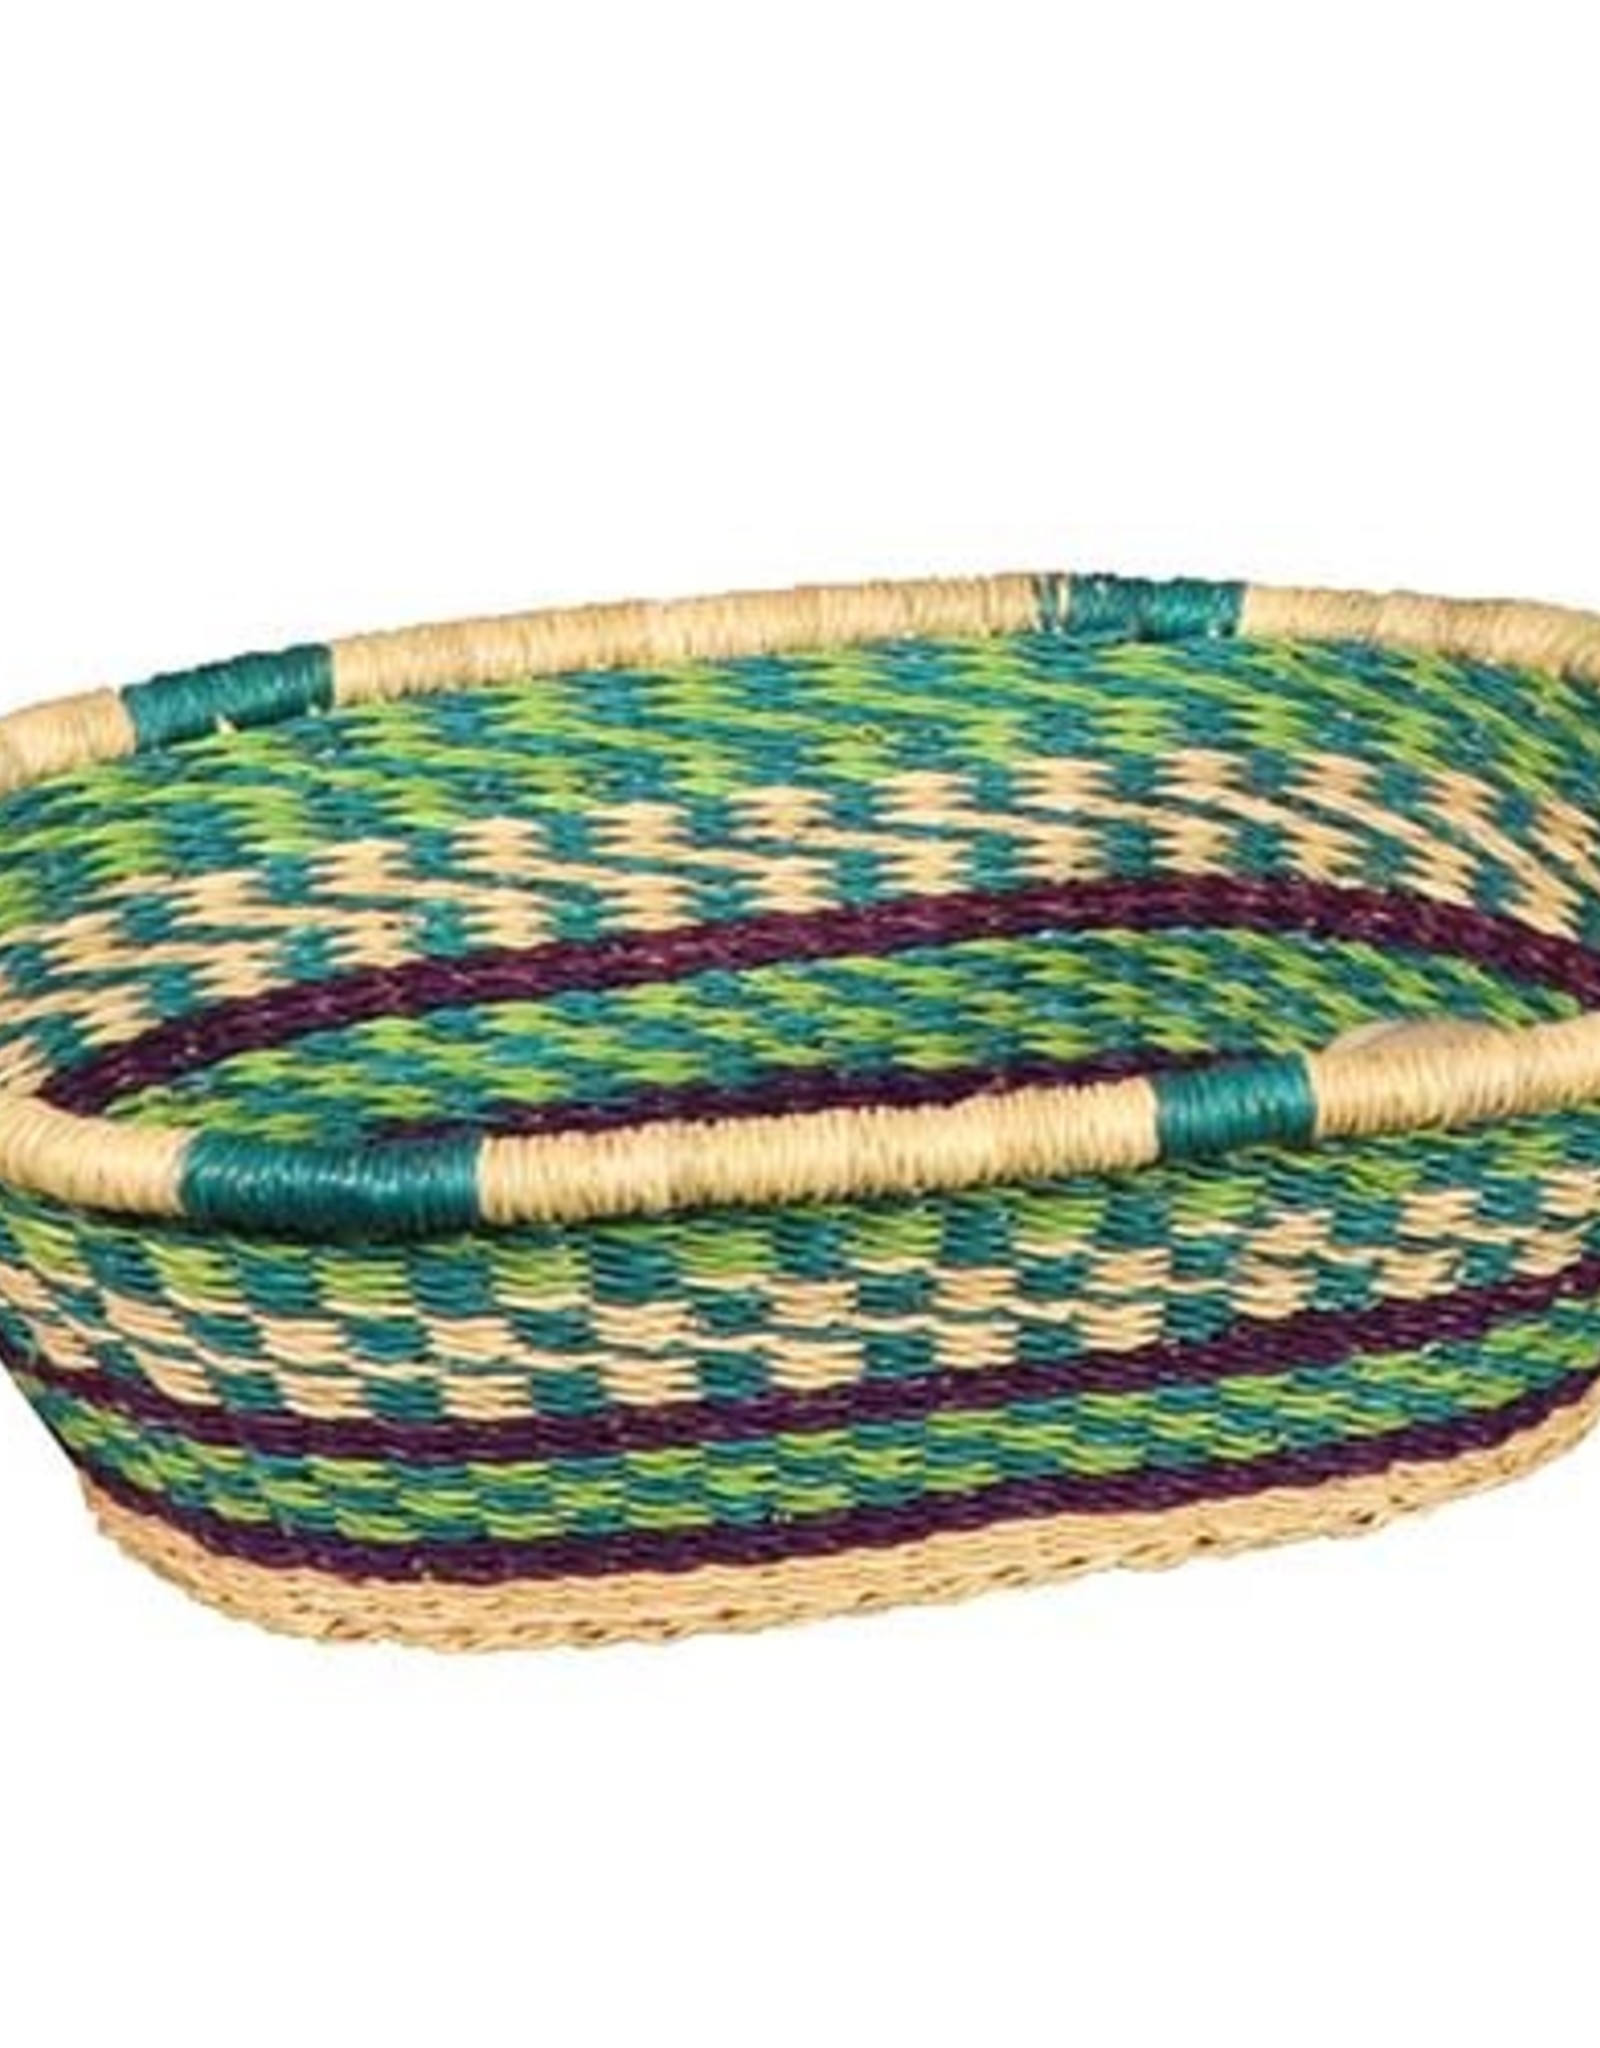 African Market Baskets Bread Basket